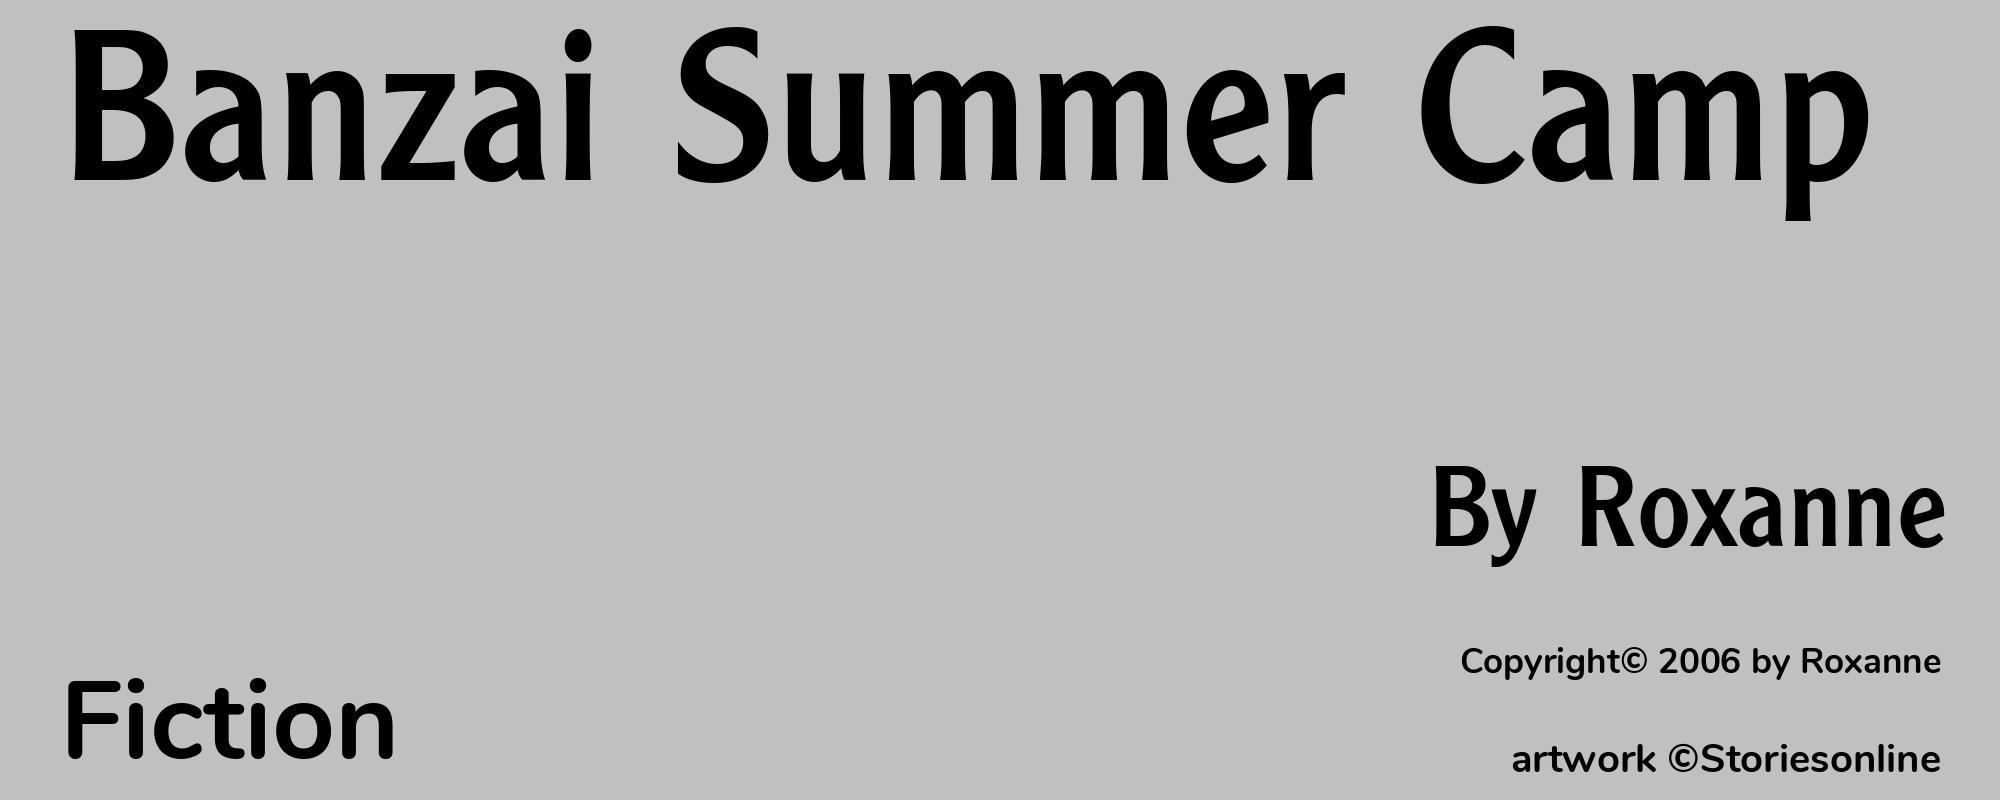 Banzai Summer Camp - Cover